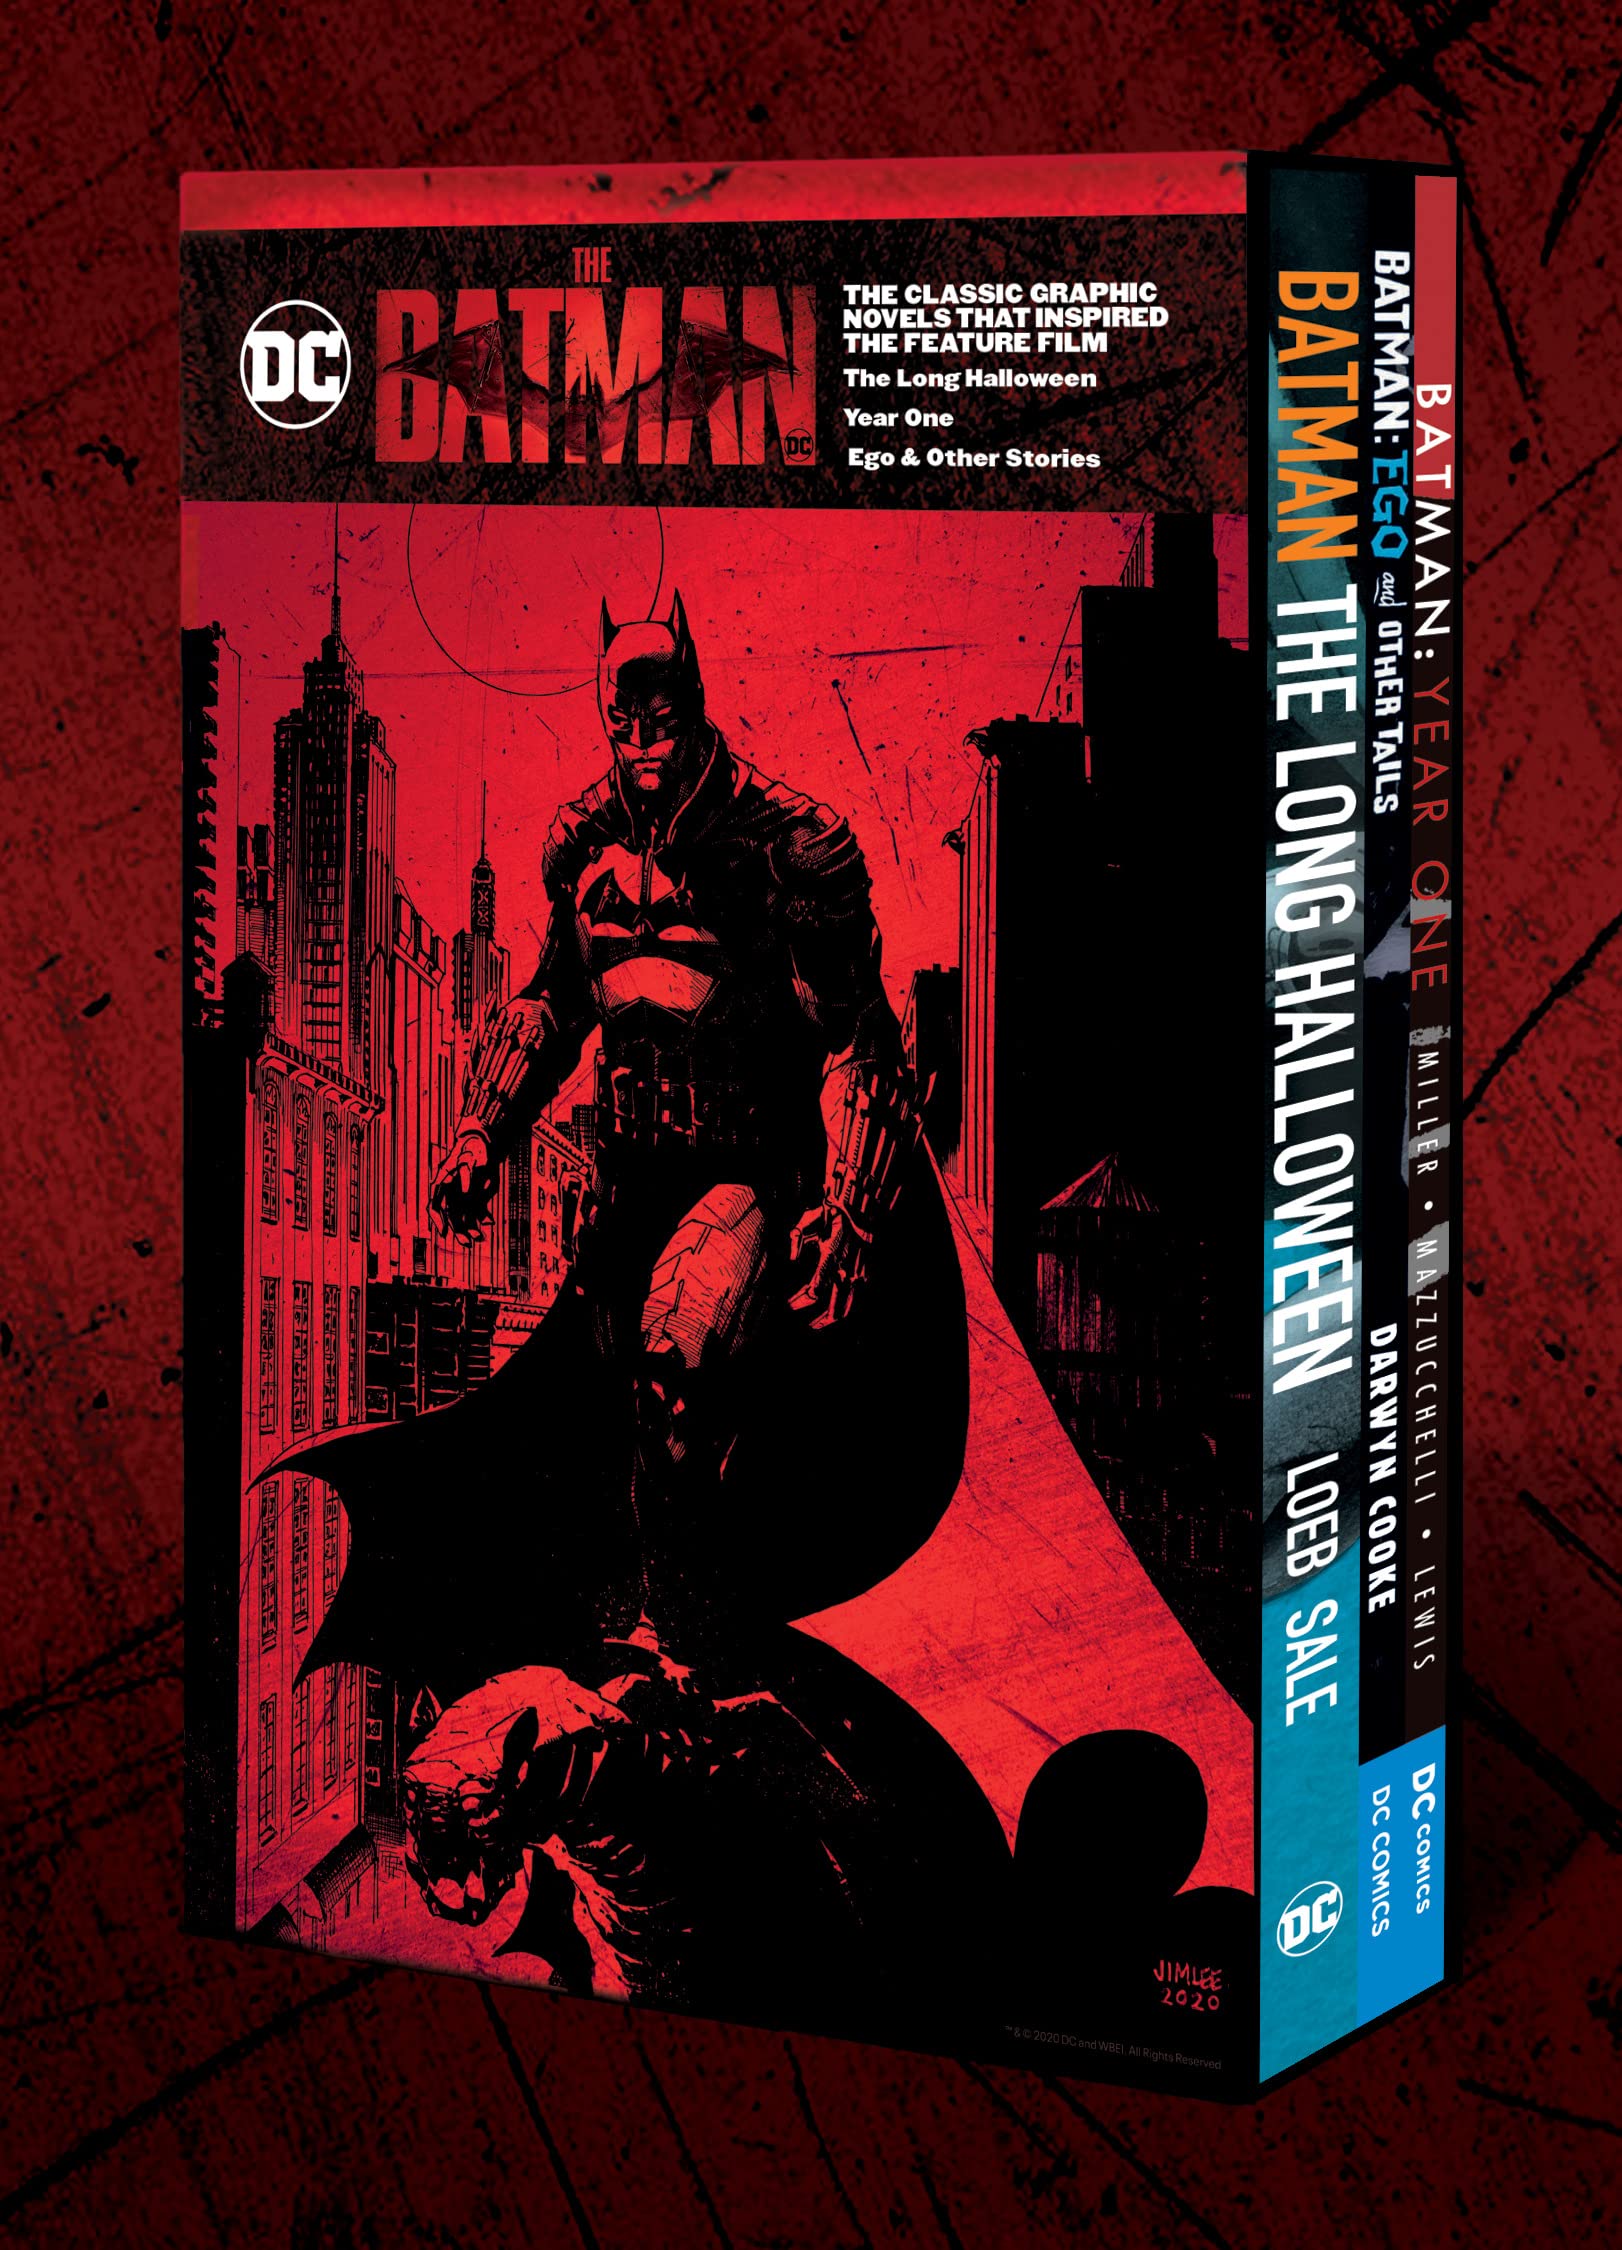 Mua The Batman Box Set trên Amazon Mỹ chính hãng 2023 | Fado